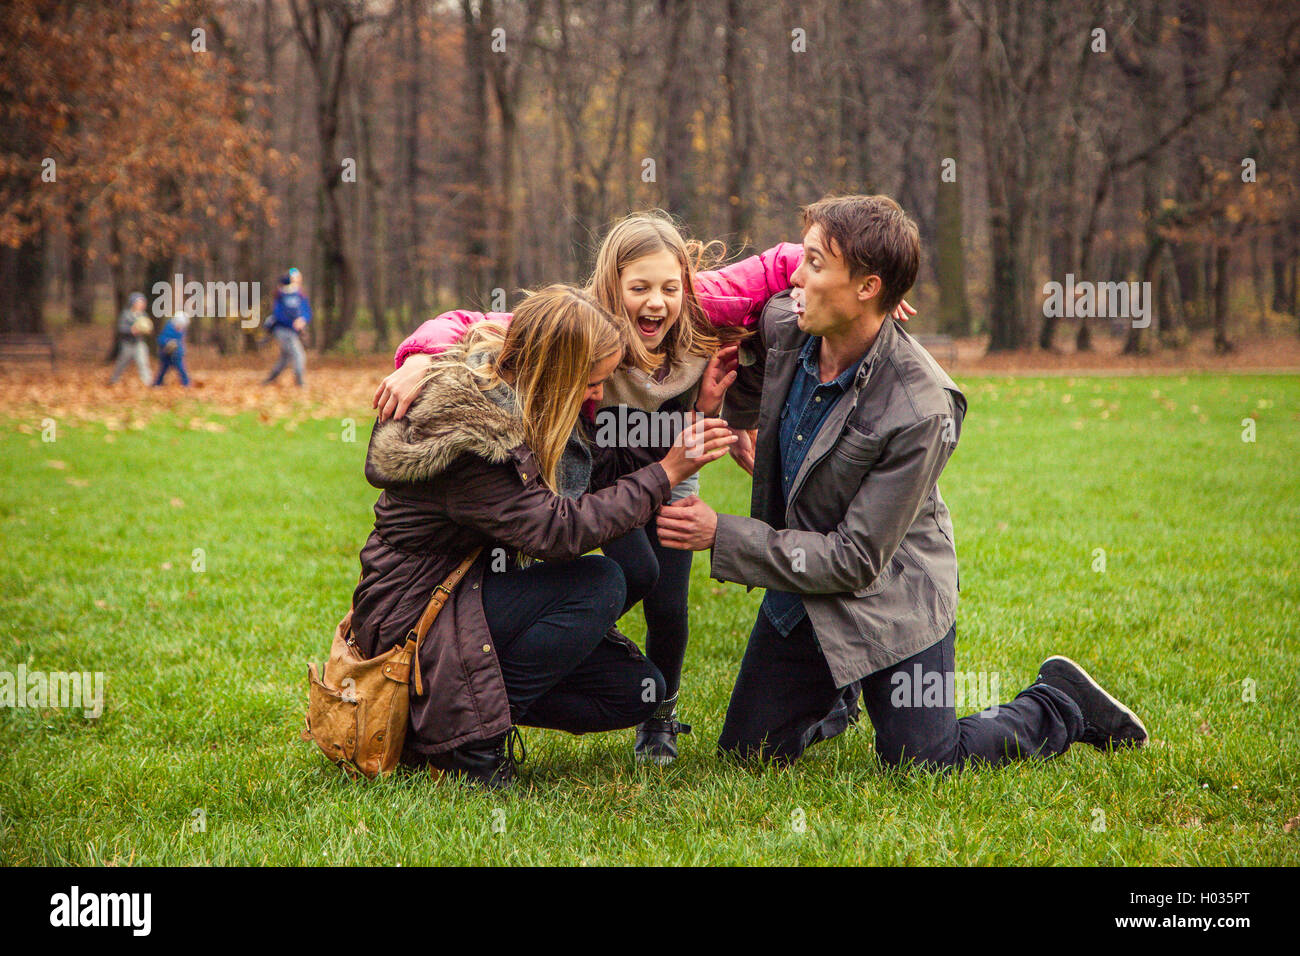 Family of three play around in park. Stock Photo